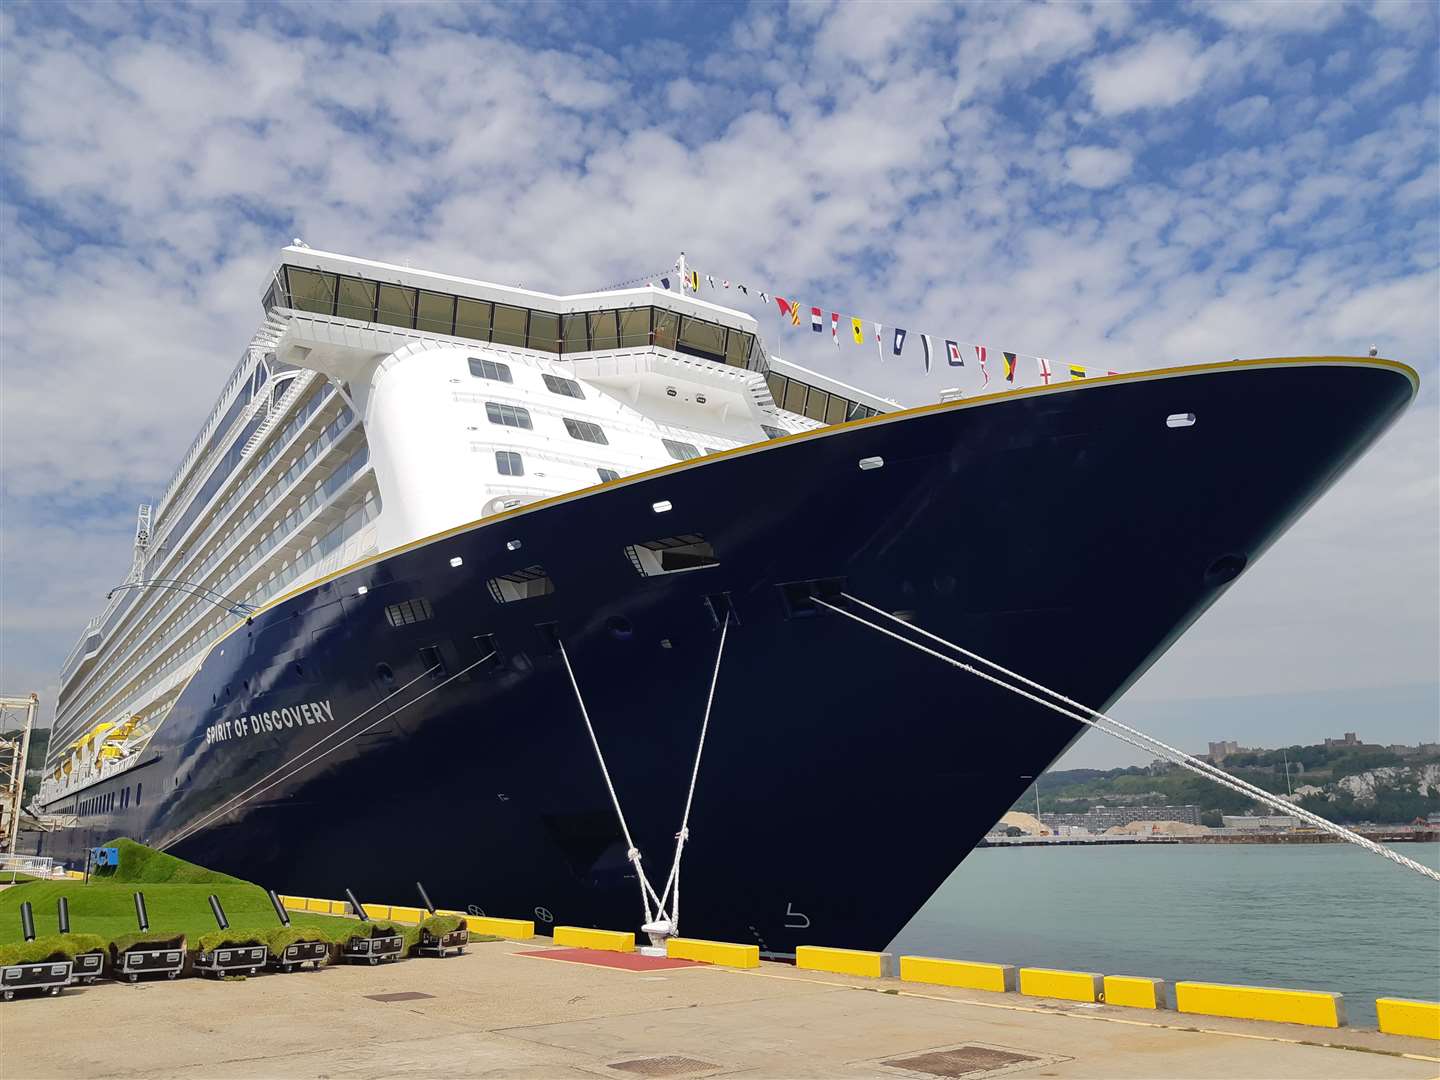 Spirit of Discovery - one of Saga's multimillion pound new cruise ships